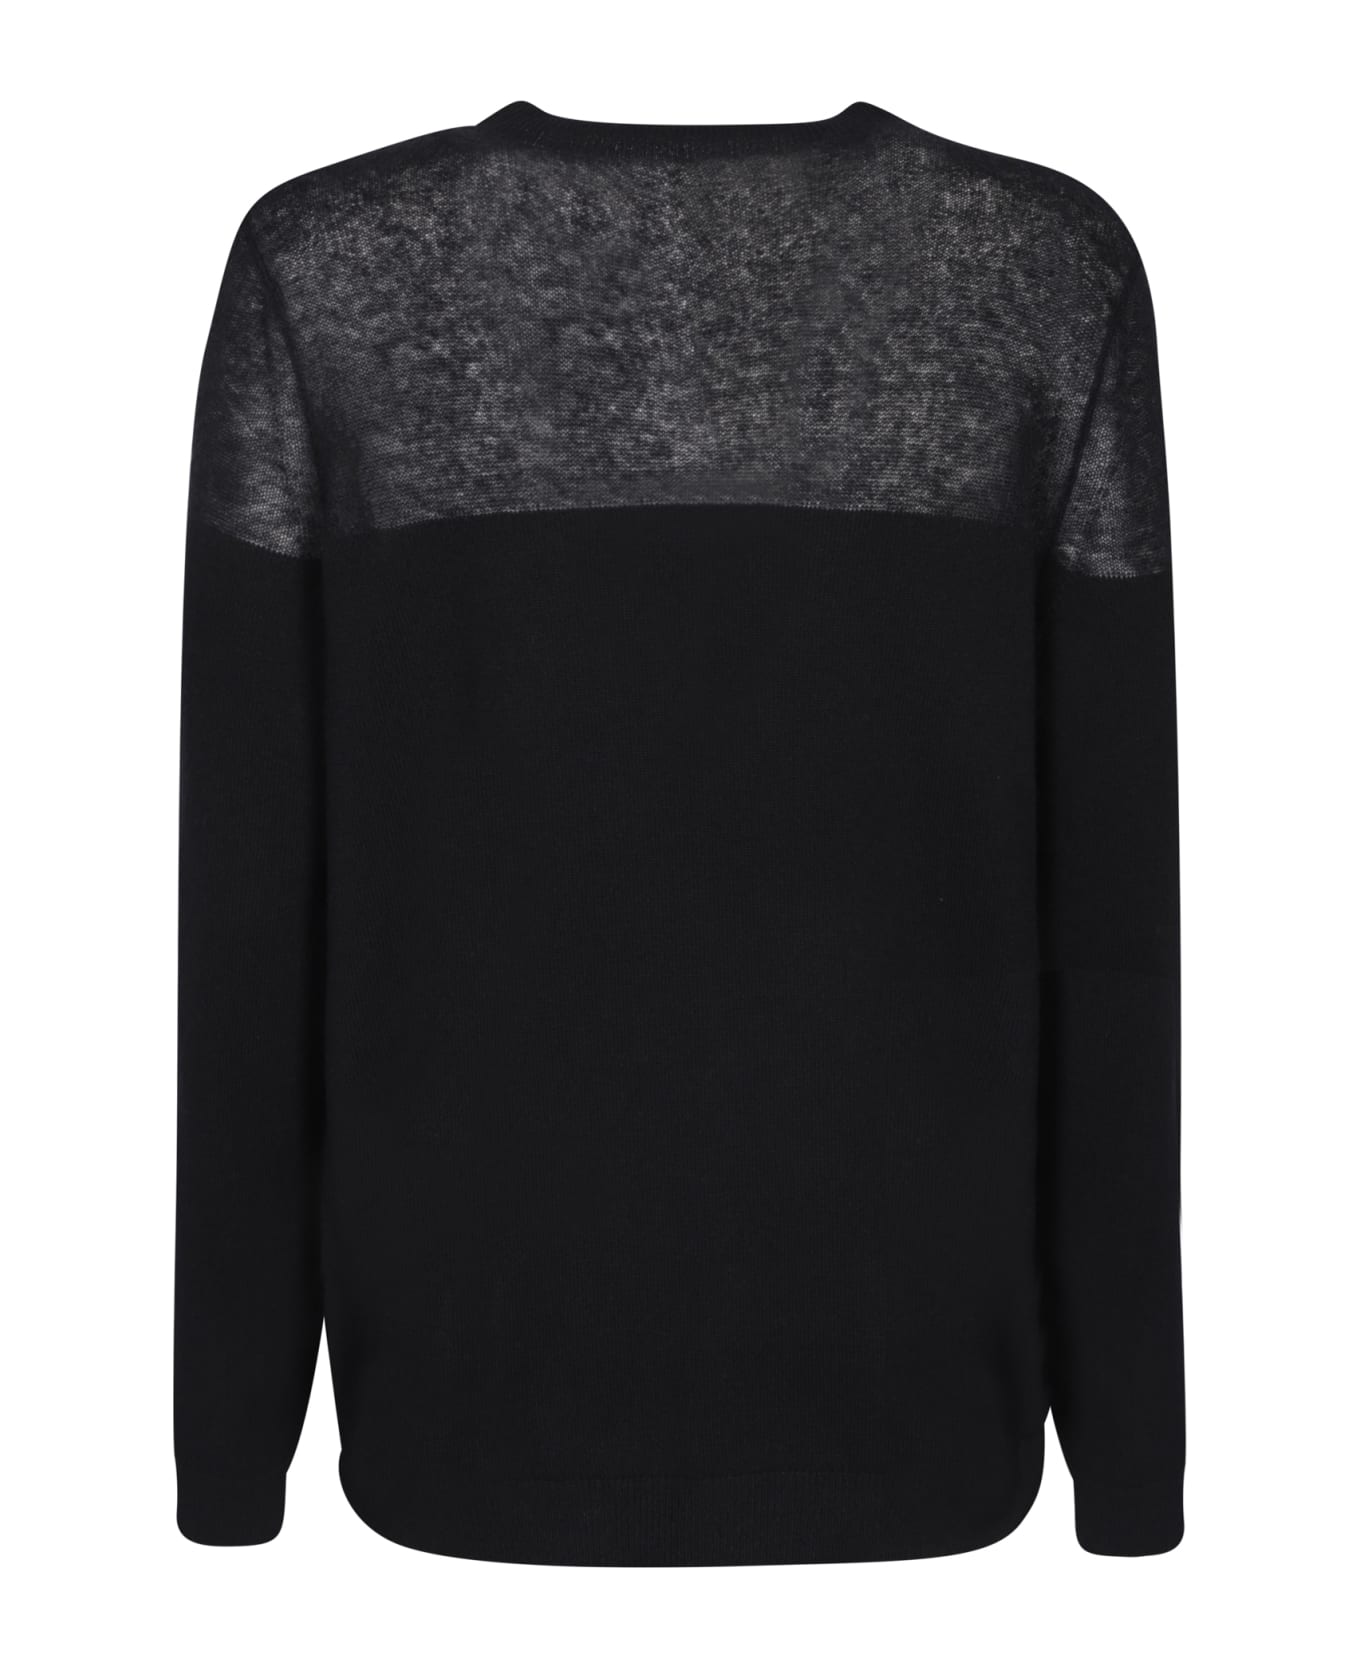 Fabiana Filippi Premium Yarn Black Sweater - Black ニットウェア